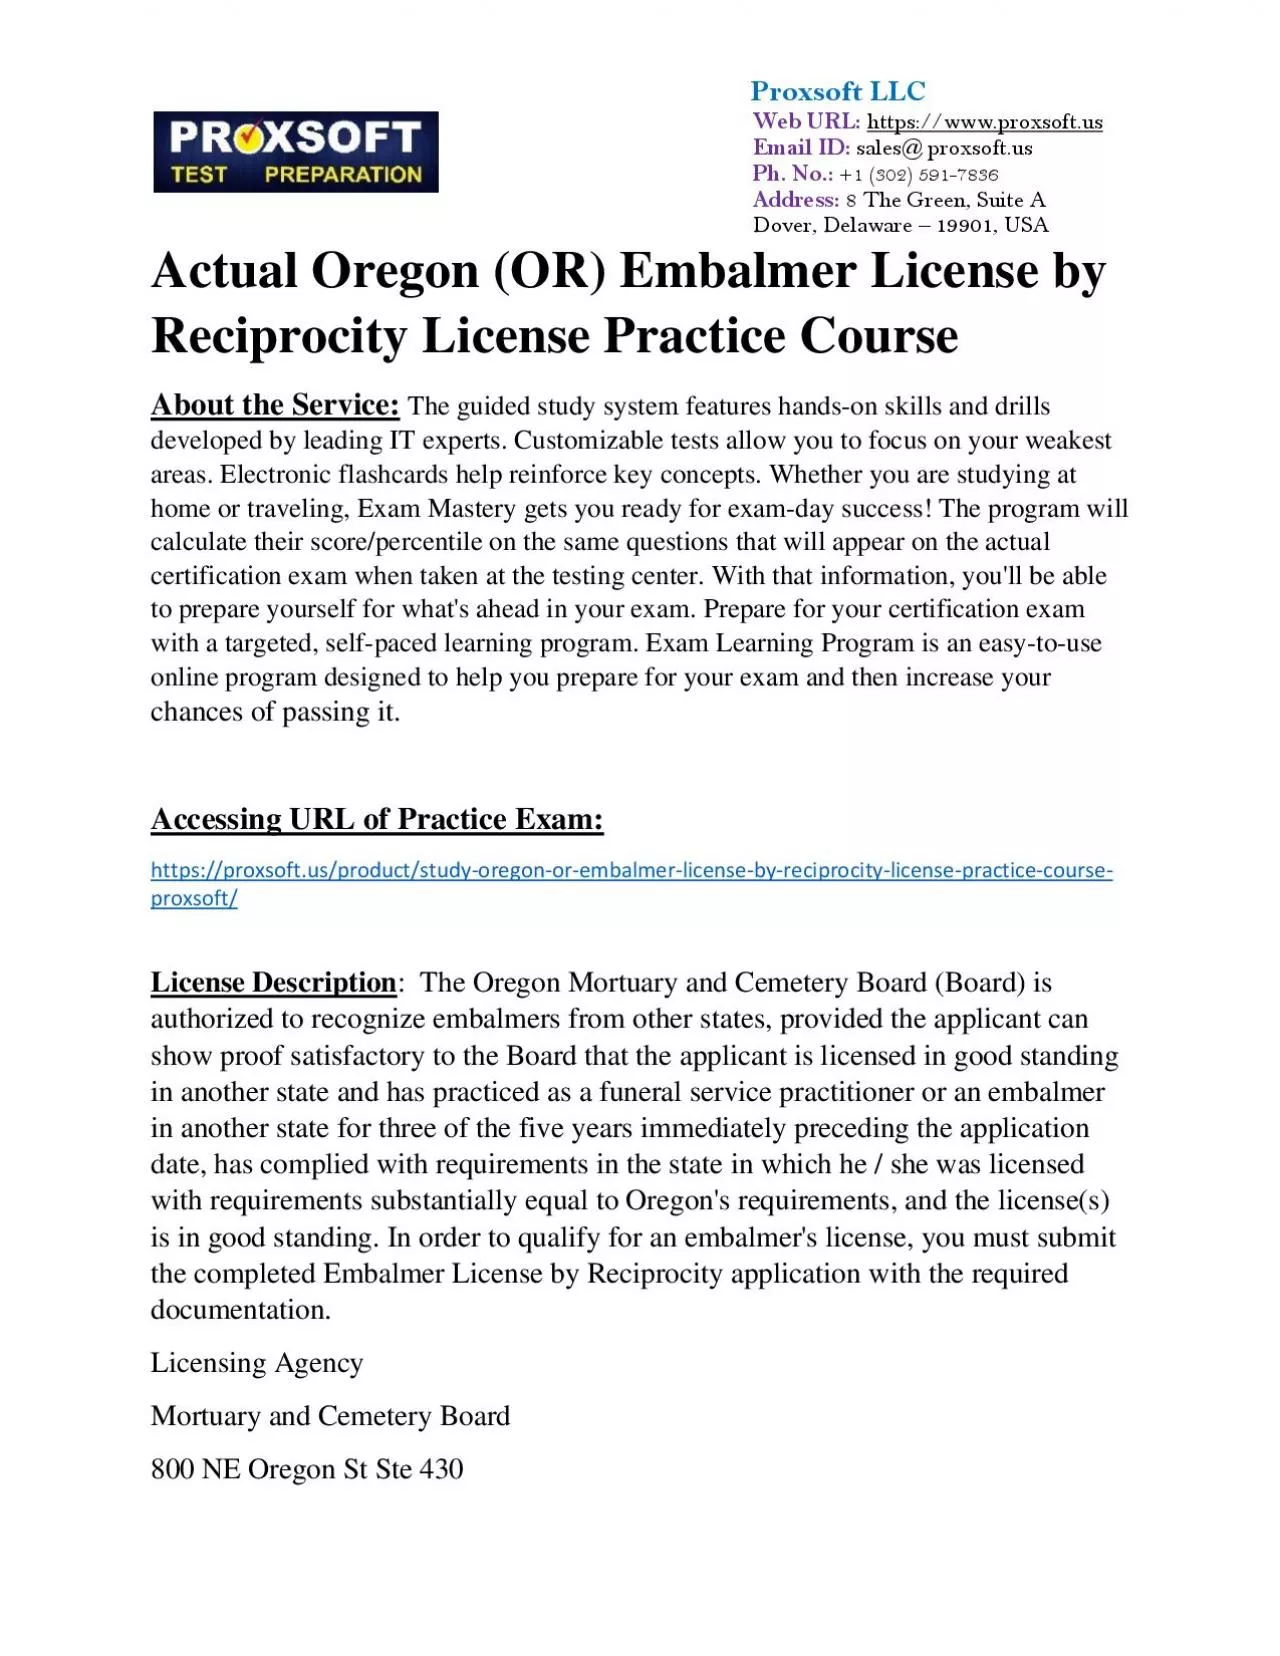 Actual Oregon (OR) Embalmer License by Reciprocity License Practice Course